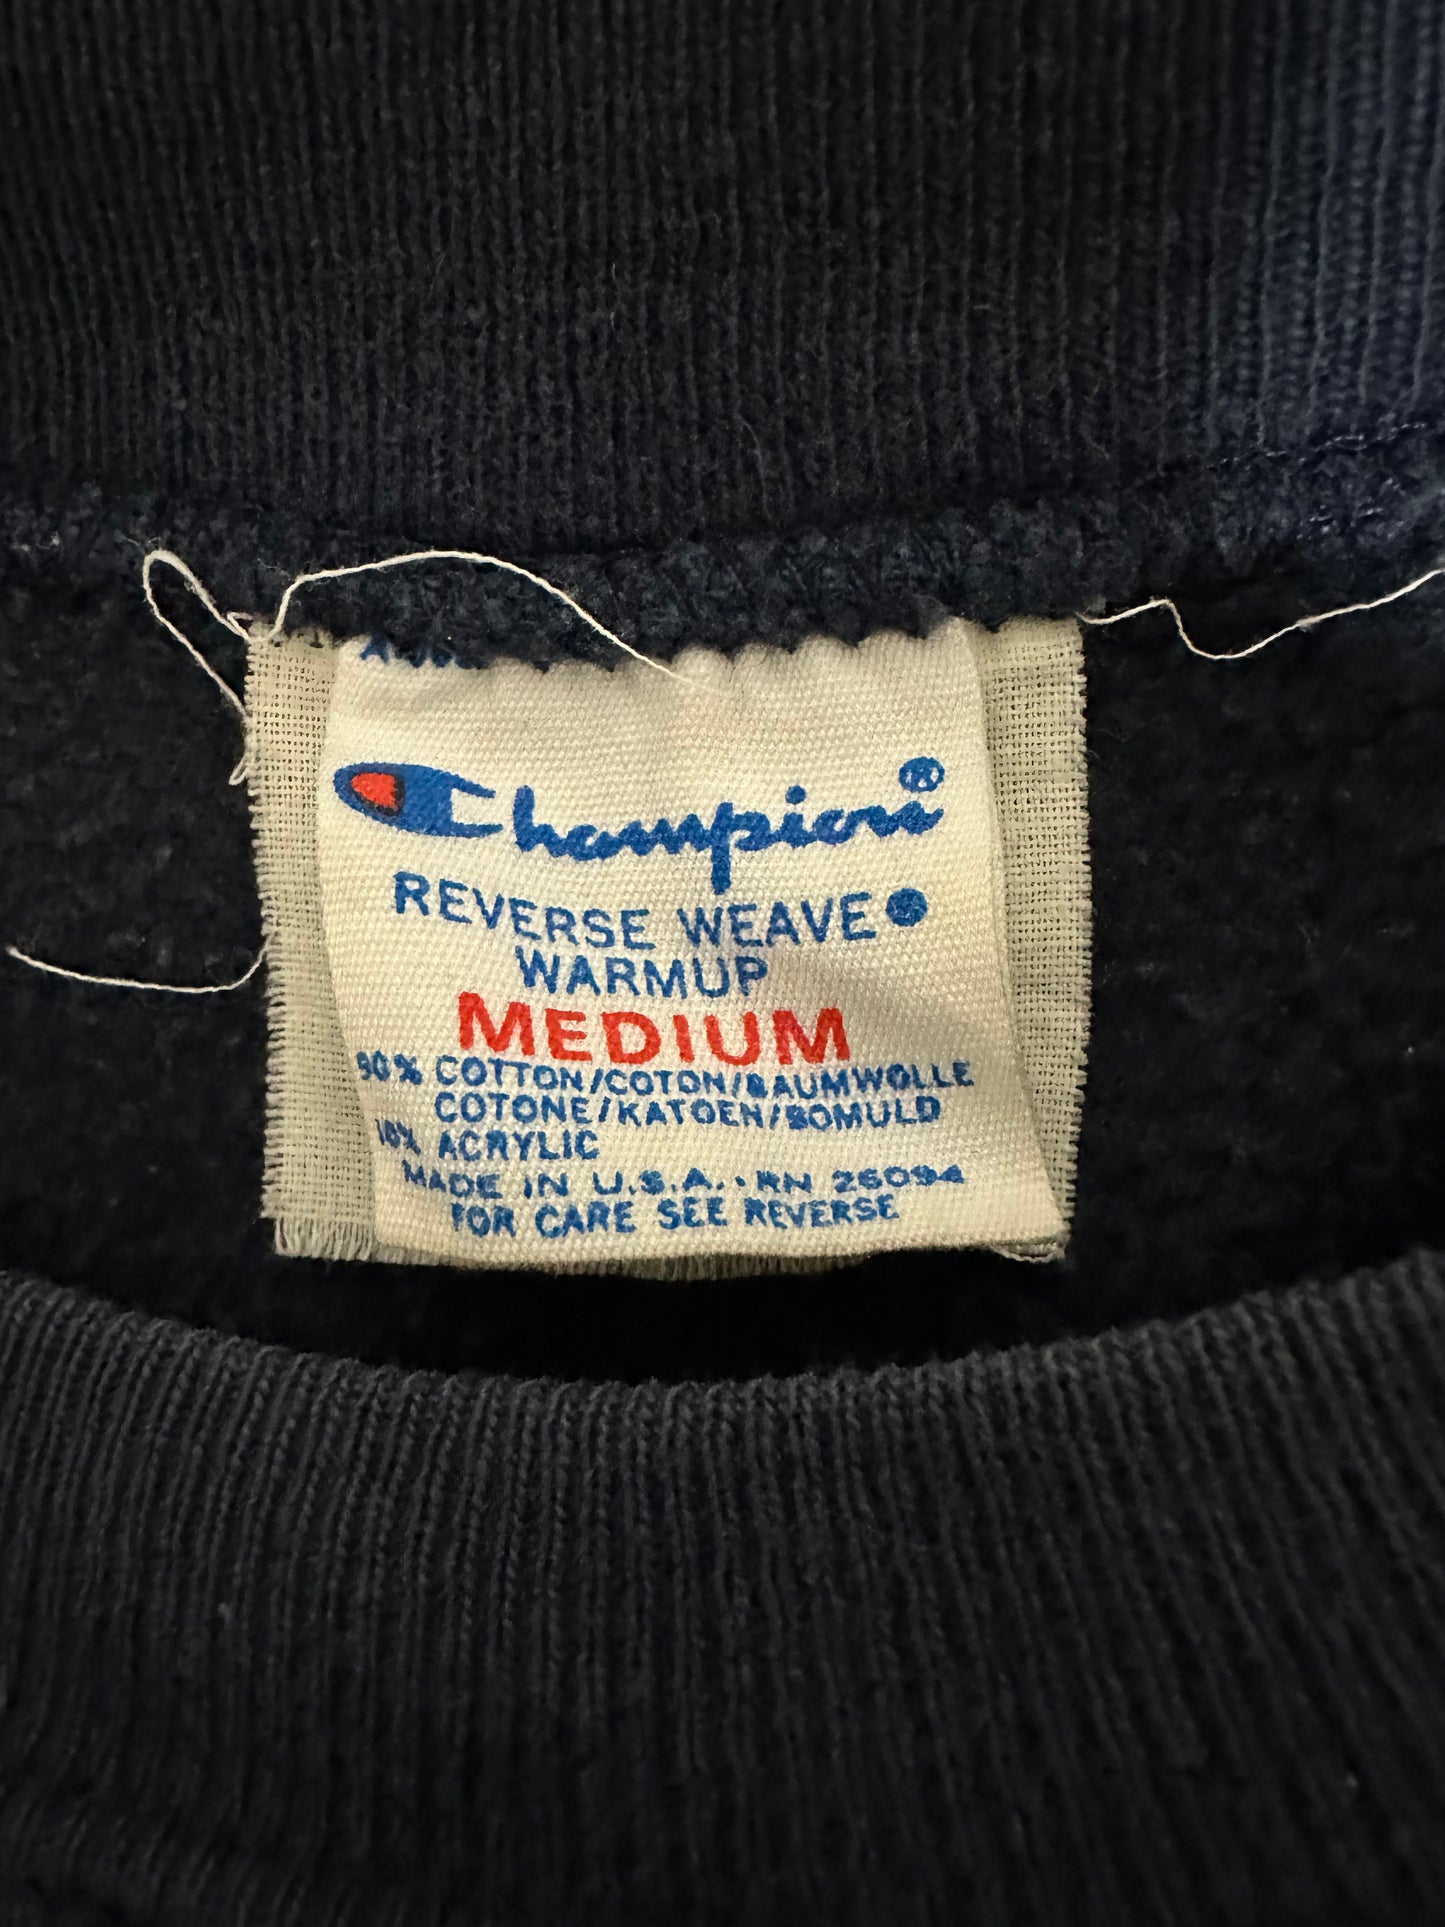 USA Champion reverse weave sweatshirt vintage 80s